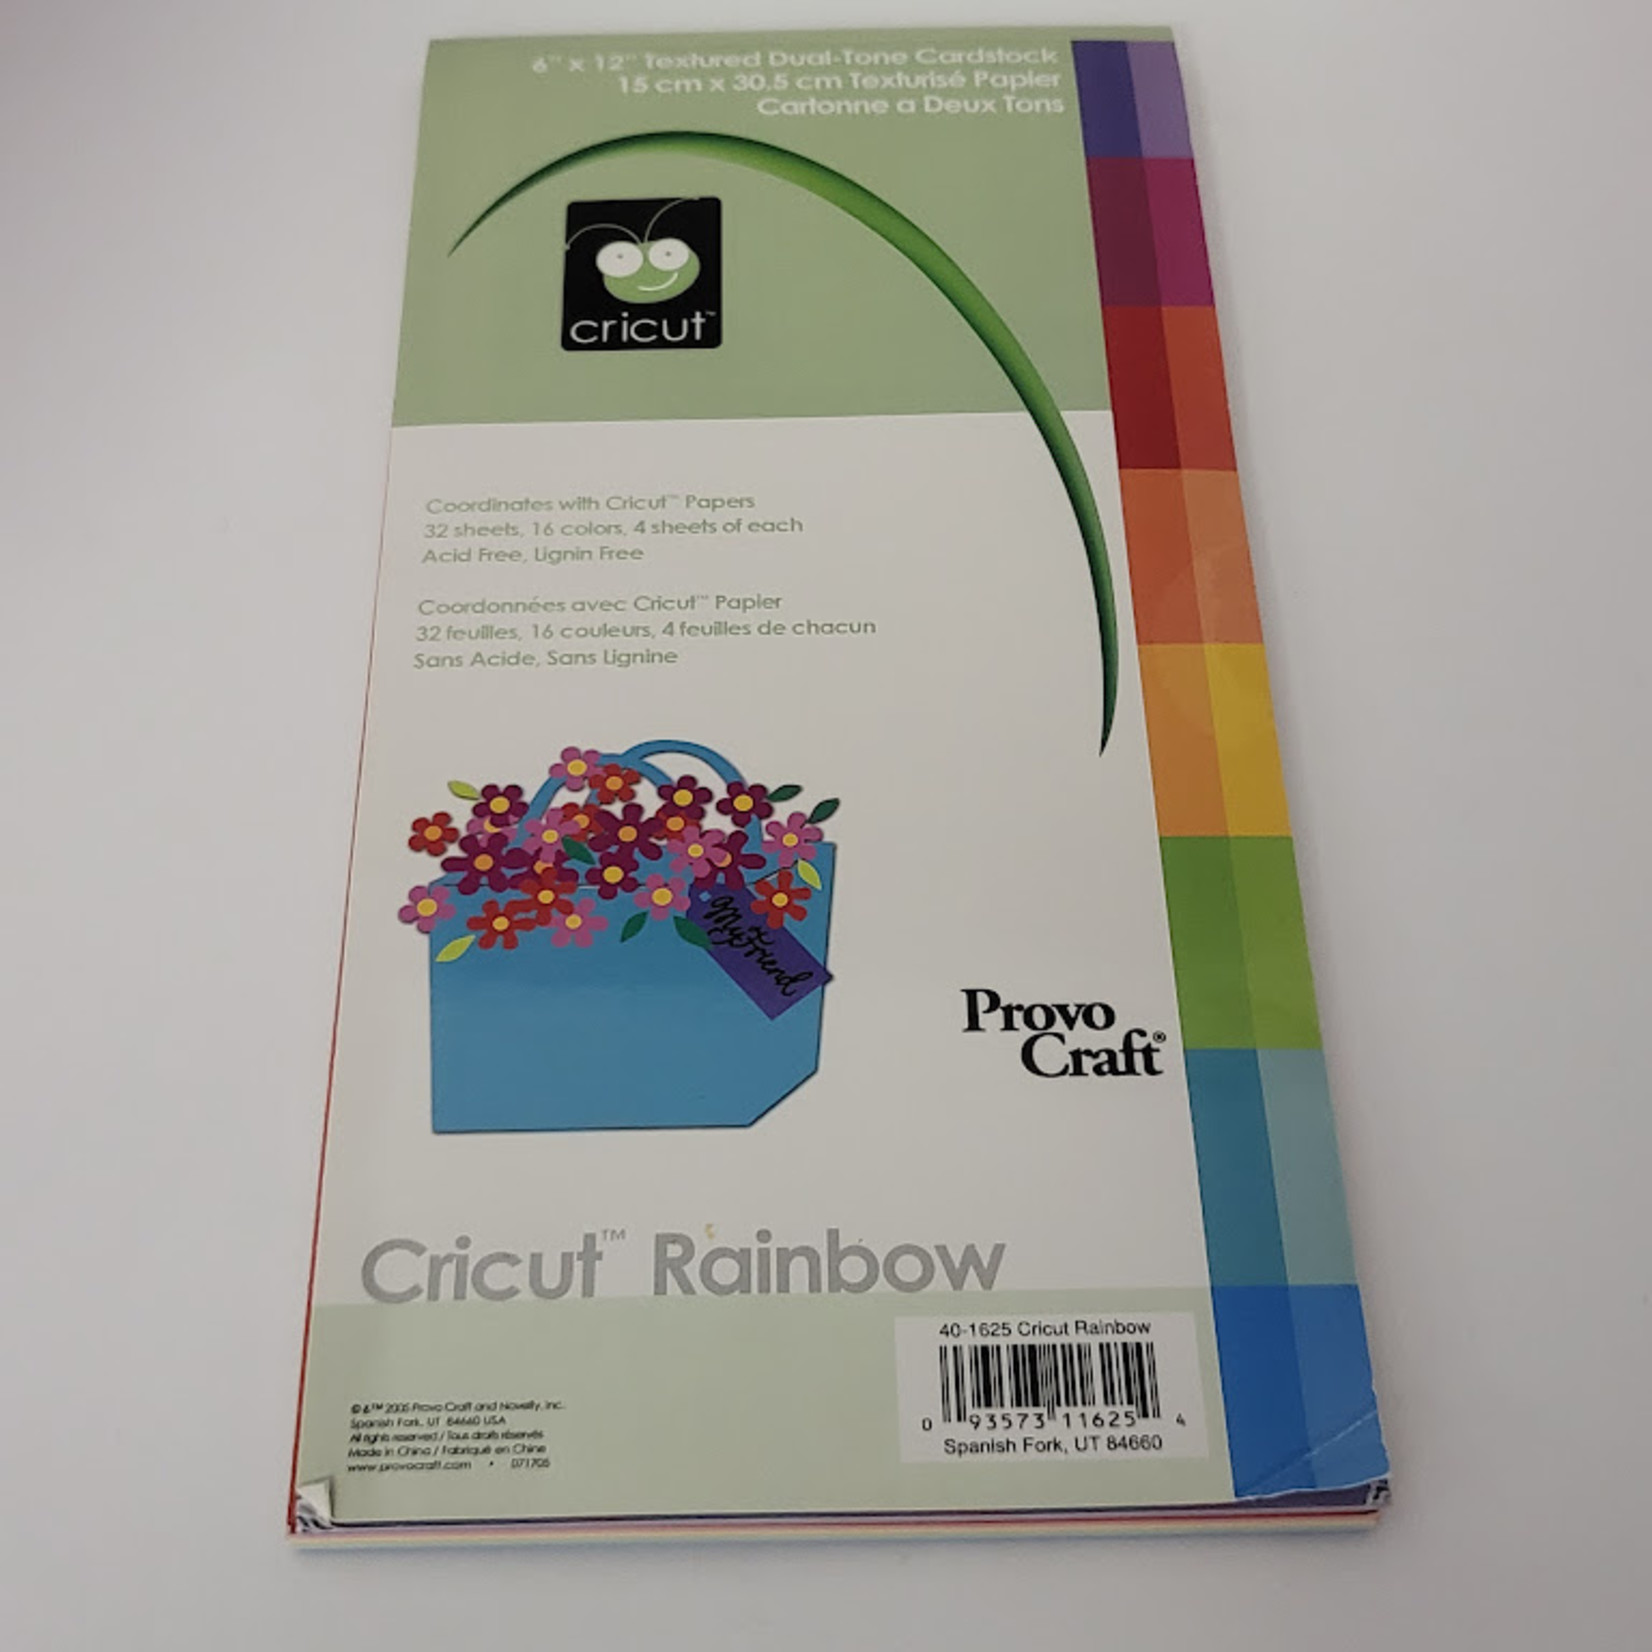 Cricut 6" x 12" Paper Pad - Cardstock - Rainbow